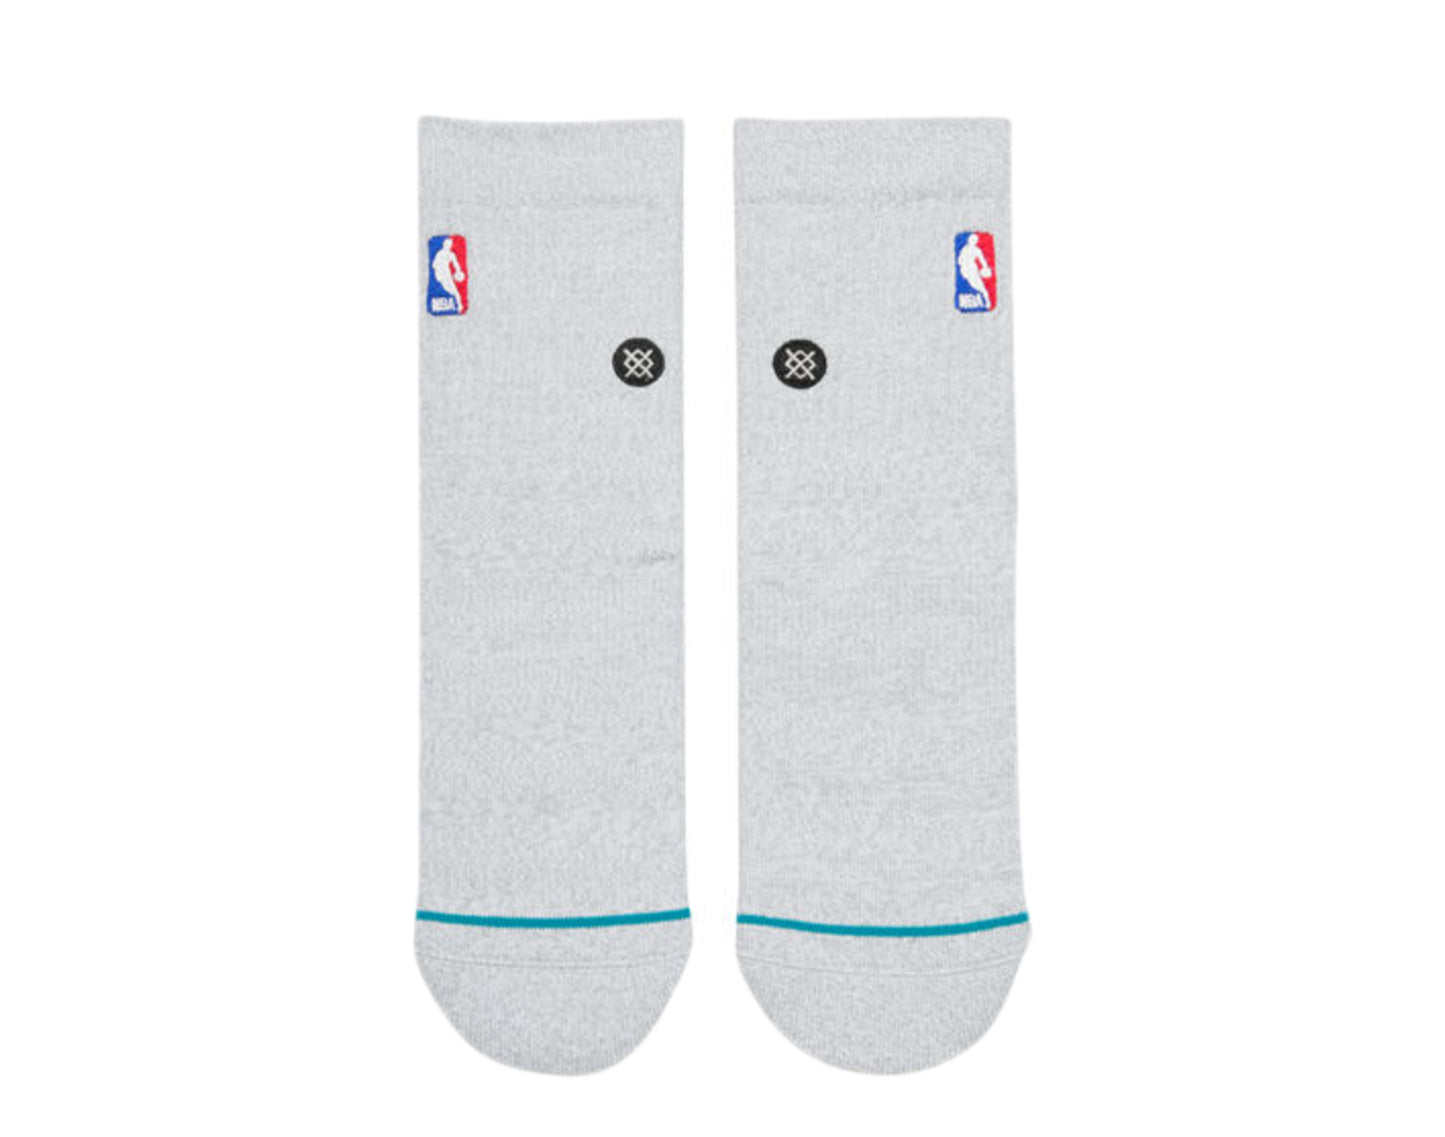 Stance Casual NBA Logoman QTR Heather Grey Ankle Socks M356D17LOG-HGR